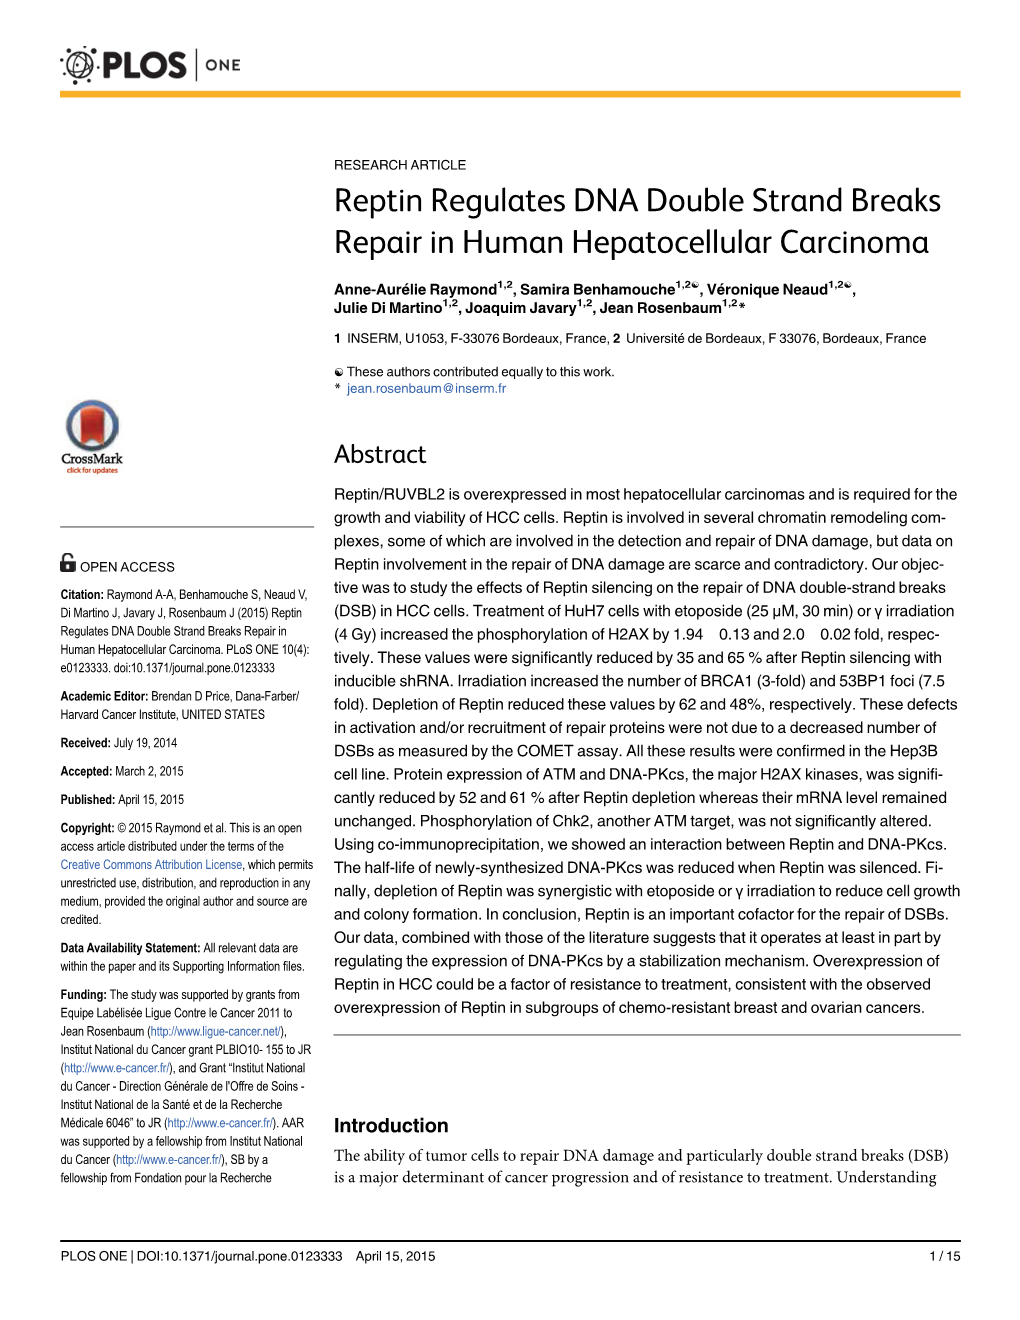 Reptin Regulates DNA Double Strand Breaks Repair in Human Hepatocellular Carcinoma